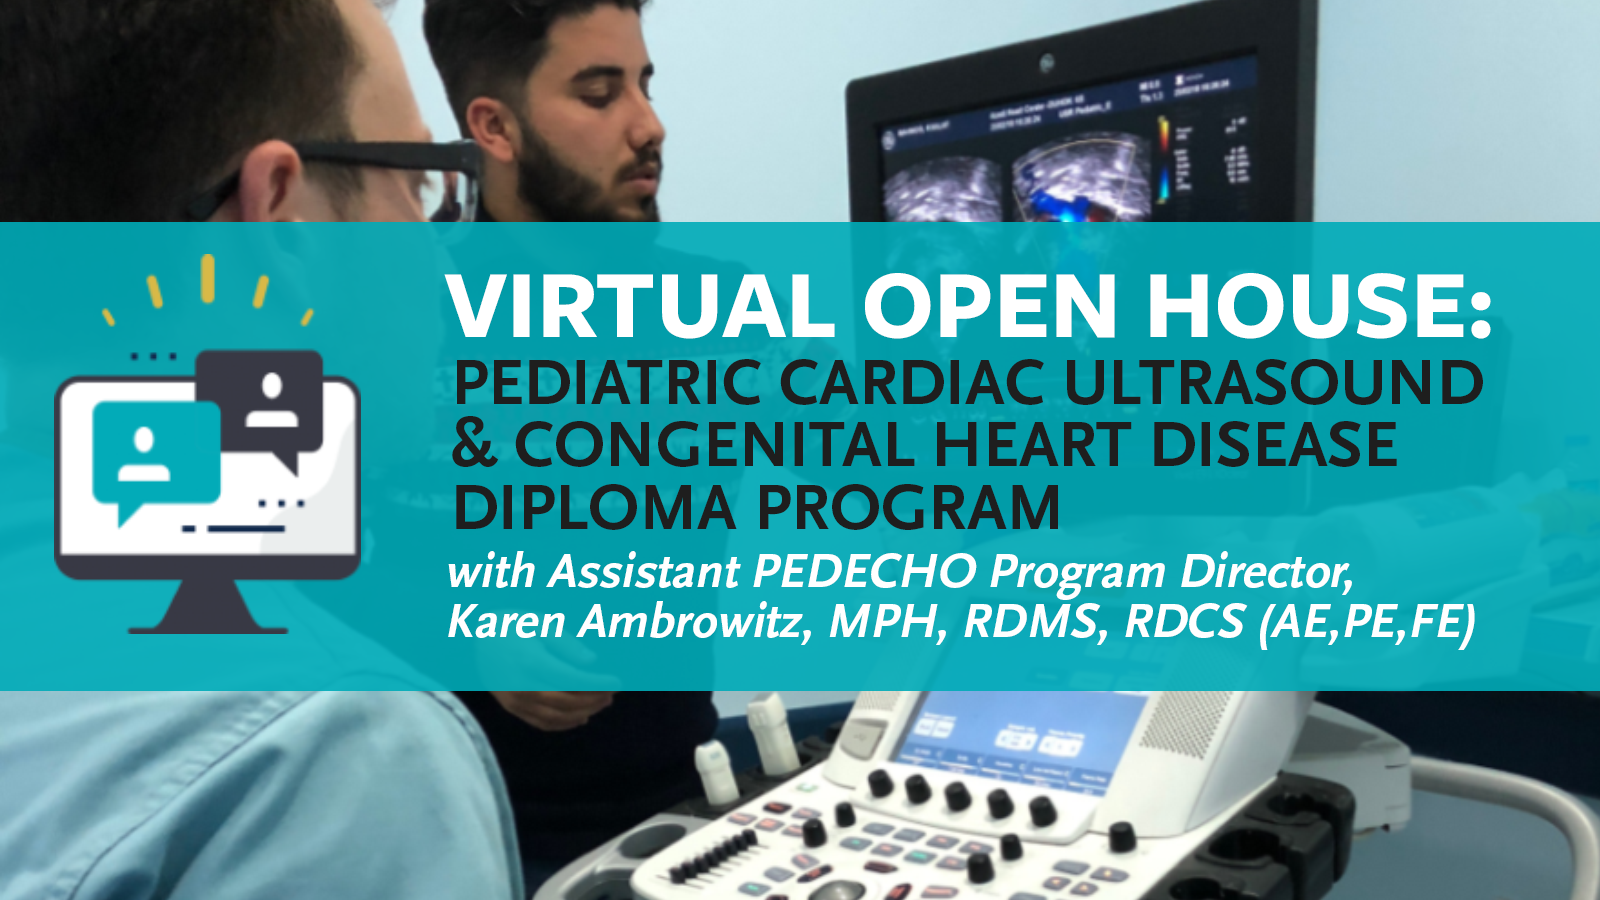 Virtual Open House Pediatric Cardiac Ultrasound and Congenital Heart Disease Program